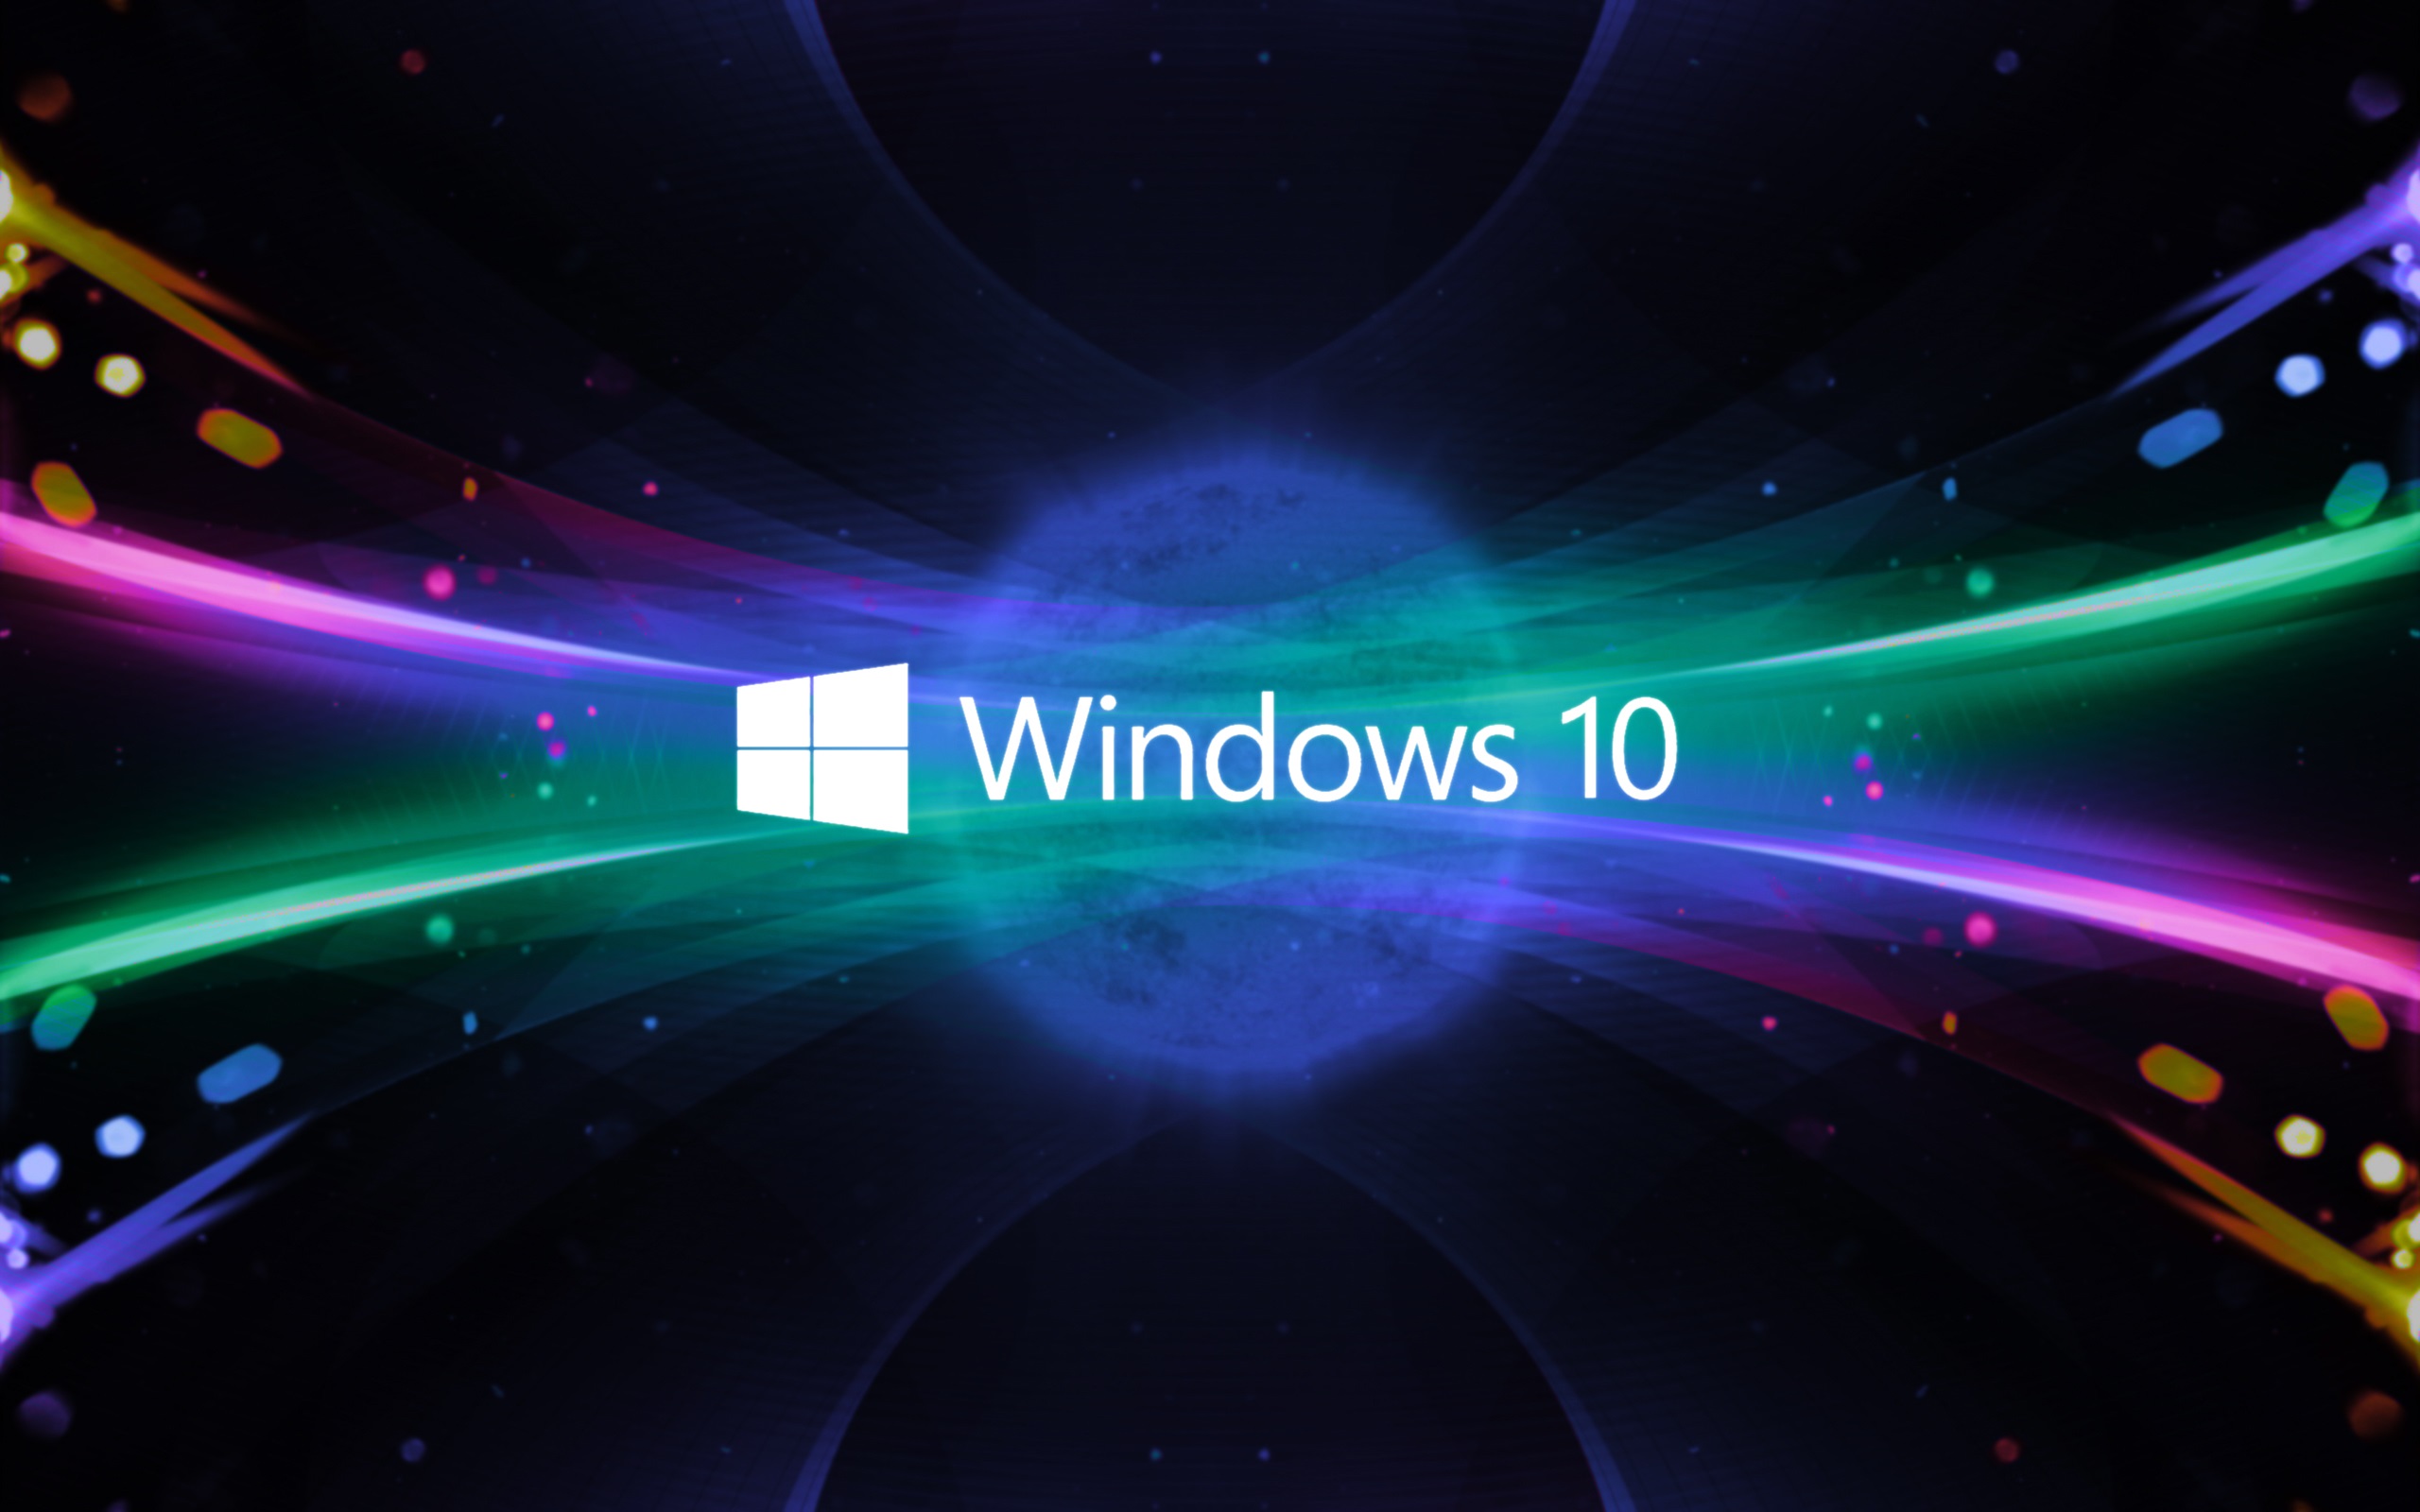 Windows-10-system-logo-space_2560x1600.jpg